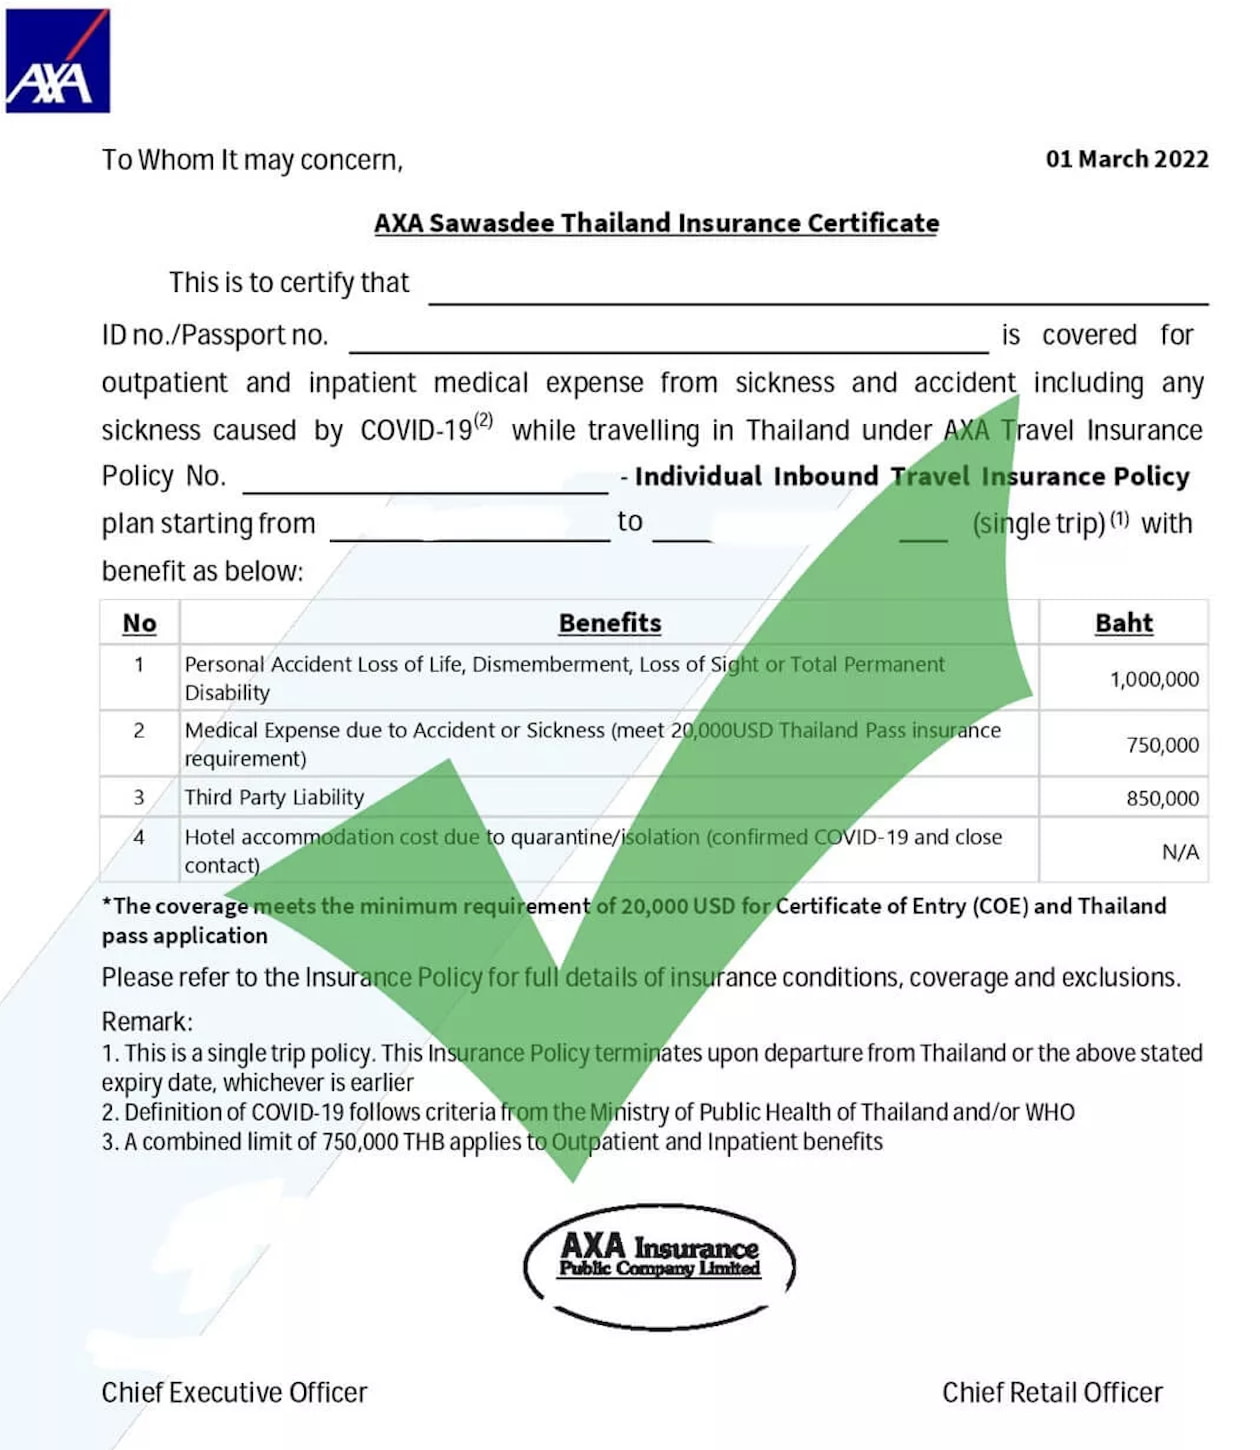 axa sawasdee thailand insurance certificate 2022 sample